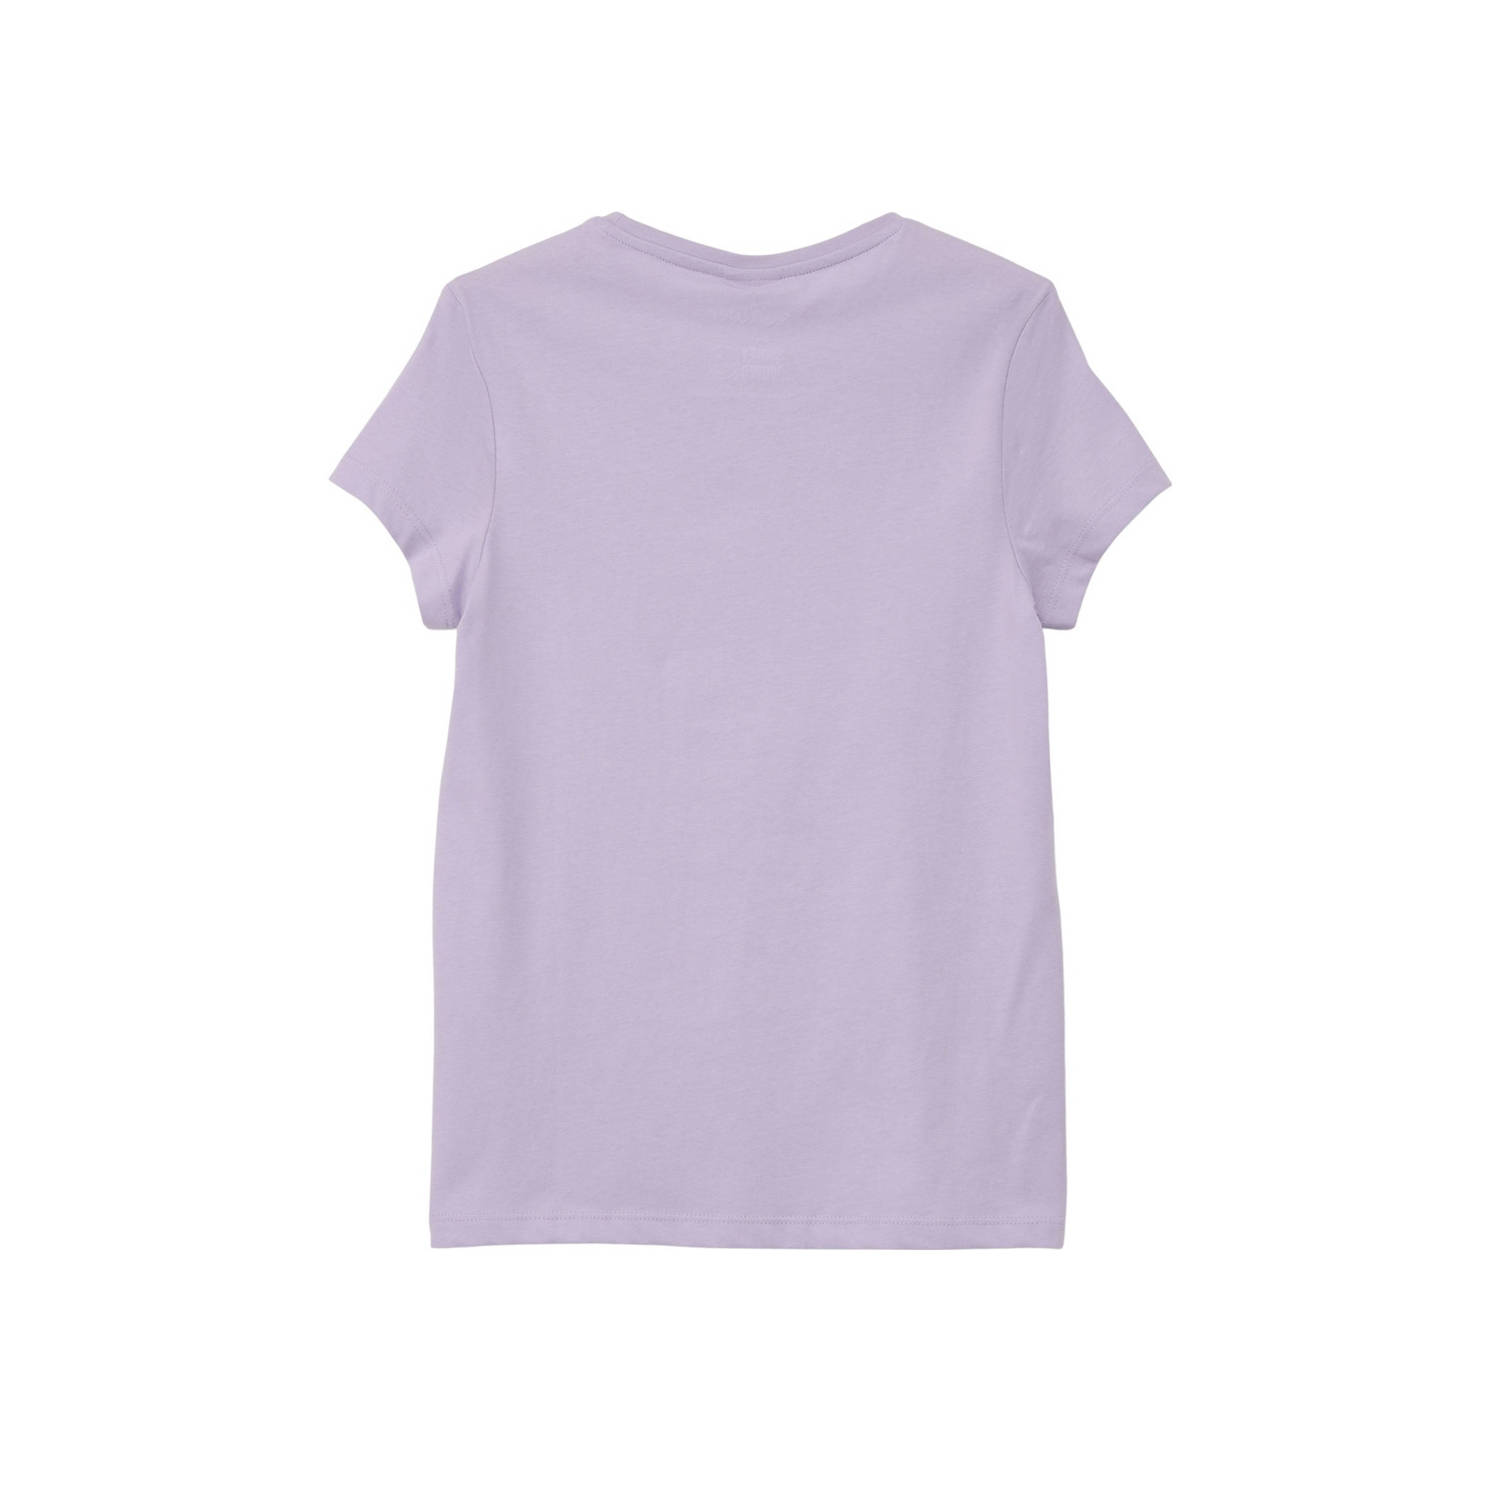 s.Oliver T-shirt met printopdruk lila